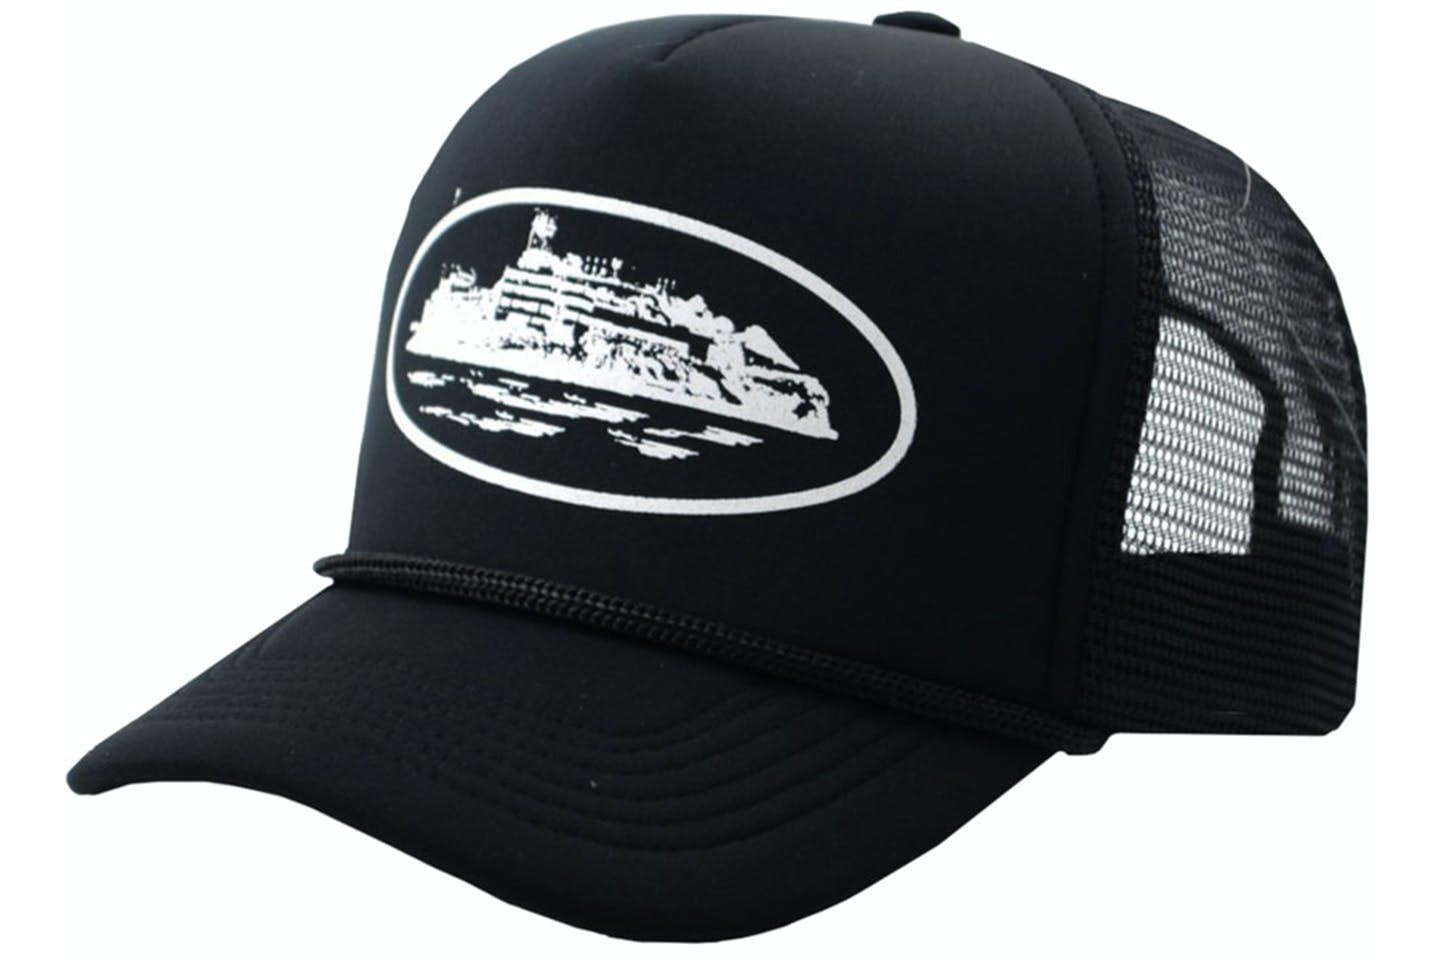 Corteiz Alcatraz Trucker Hat
Black